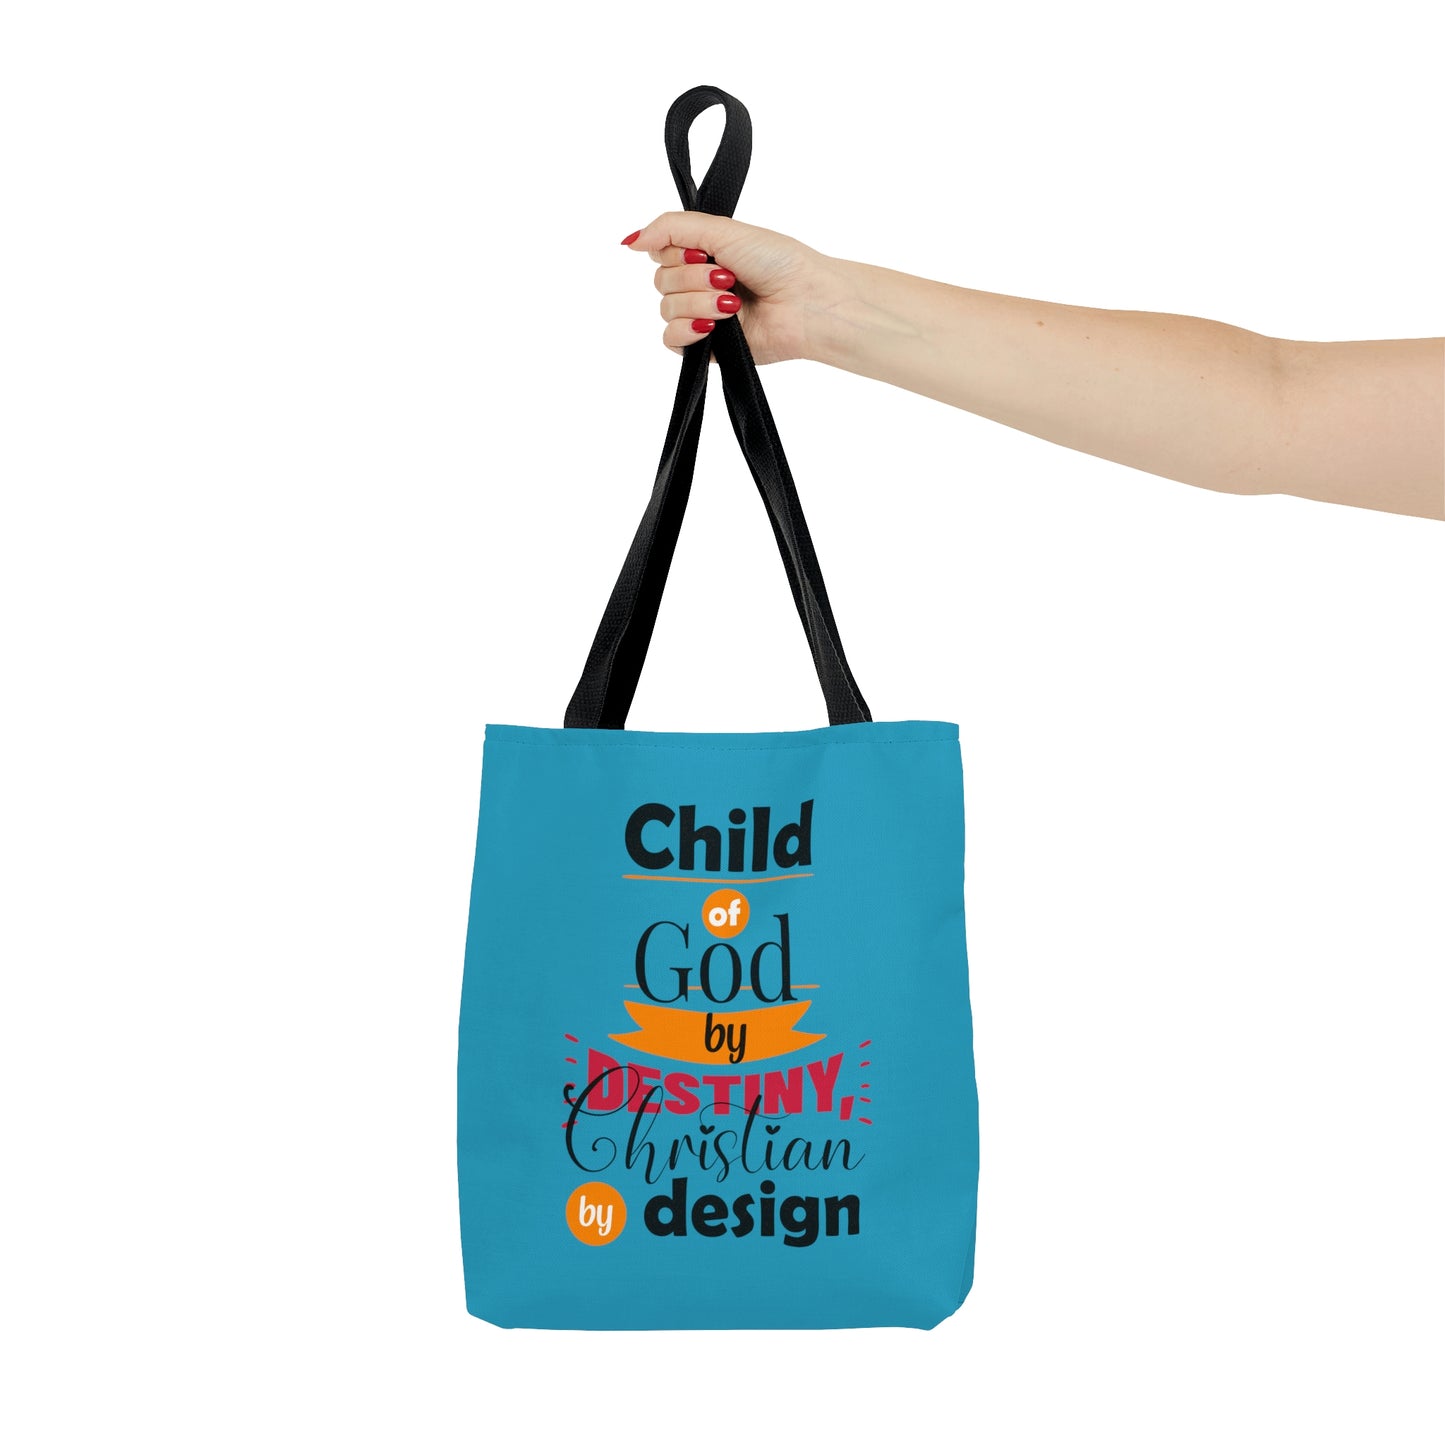 Child Of God By Destiny Christian By DesignTote Bag